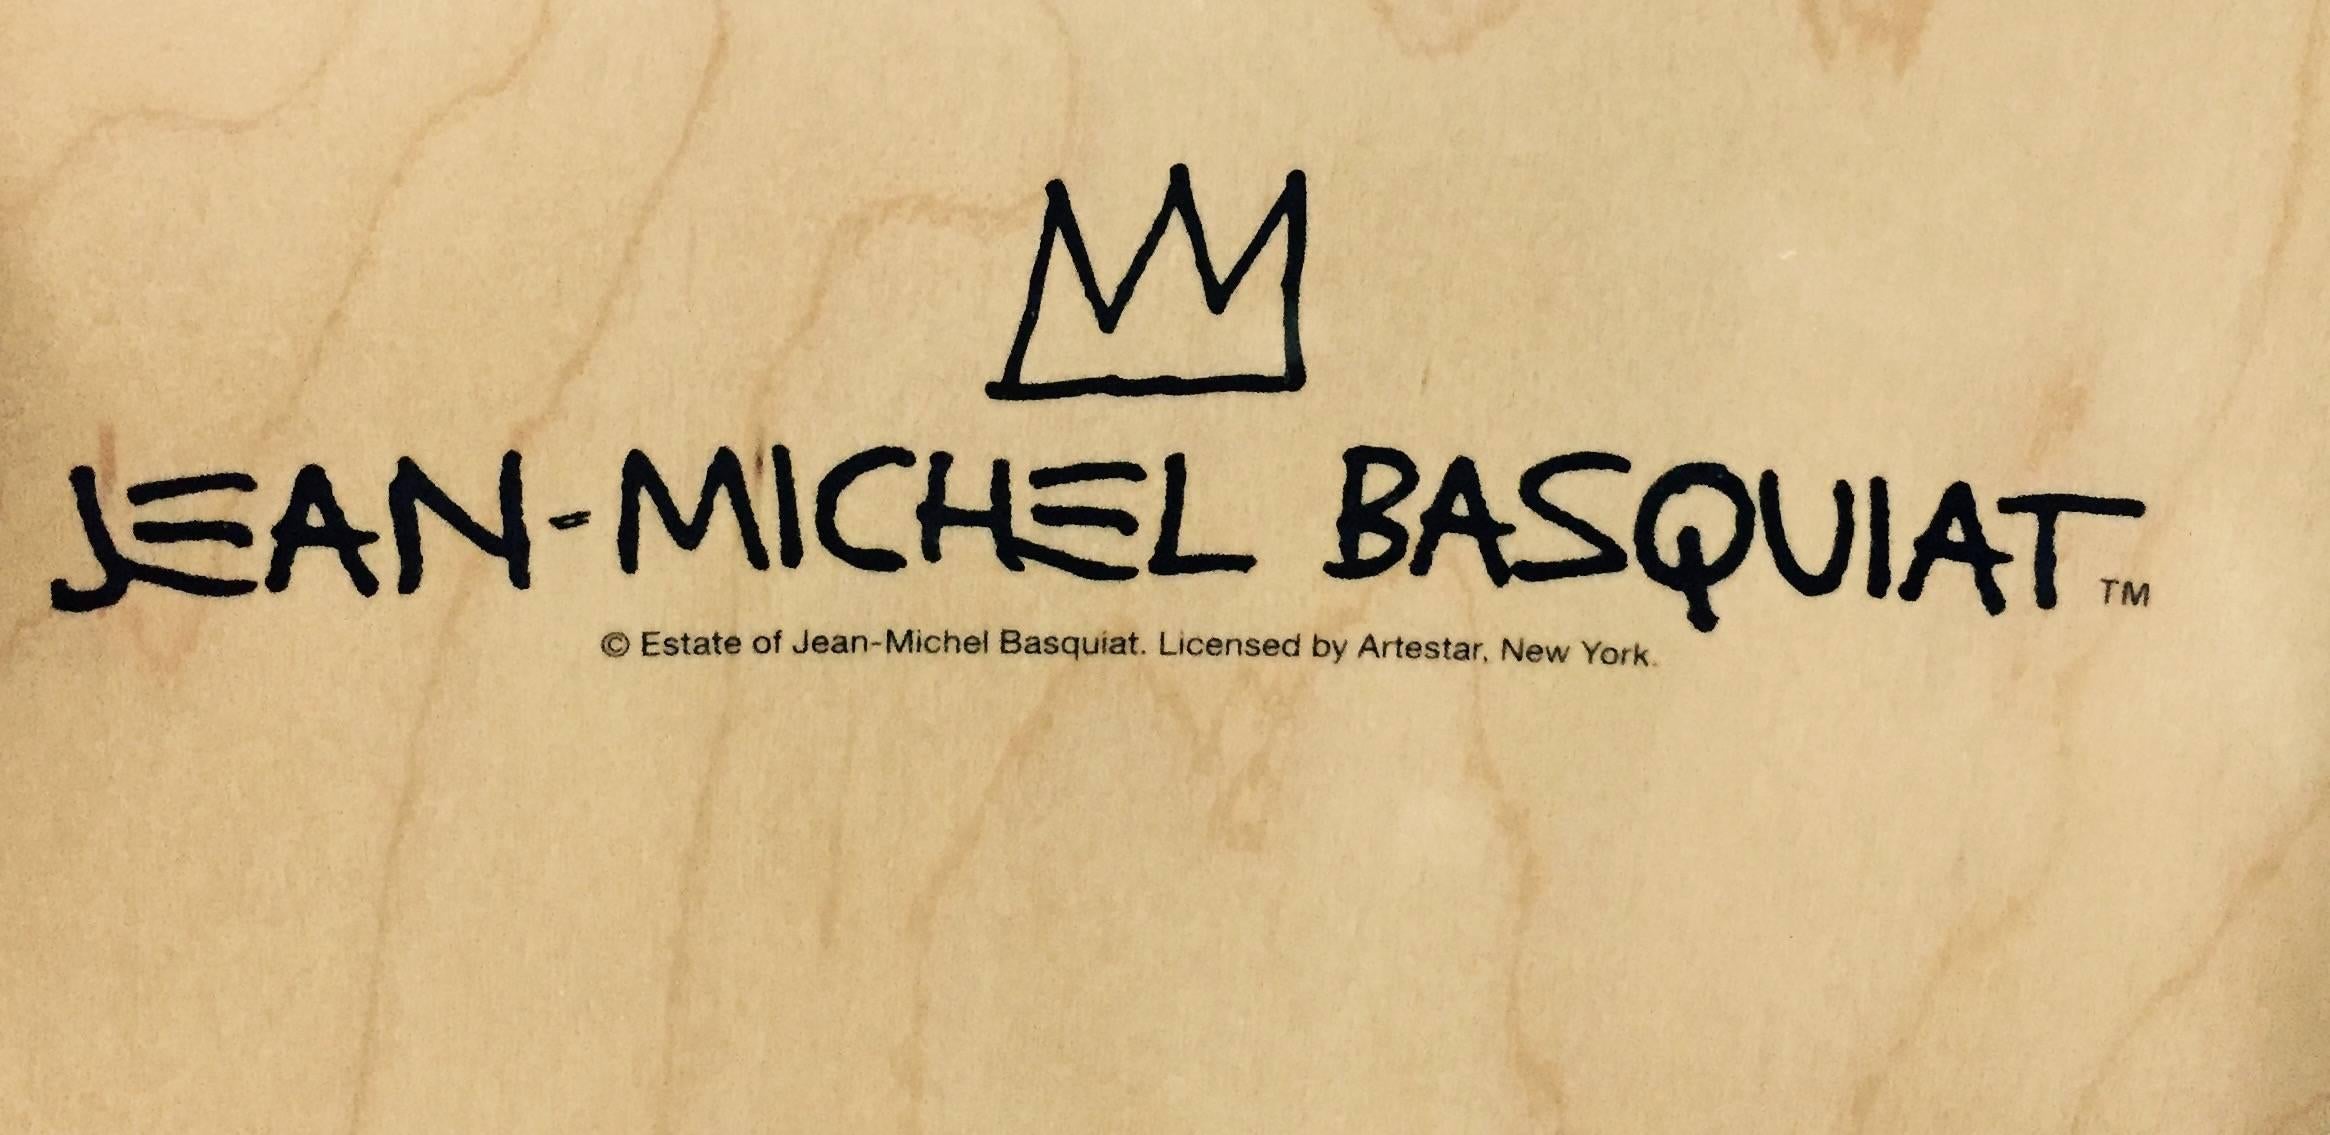 Basquiat In Italian Skateboard Decks (set of 3) - Pop Art Sculpture by after Jean-Michel Basquiat